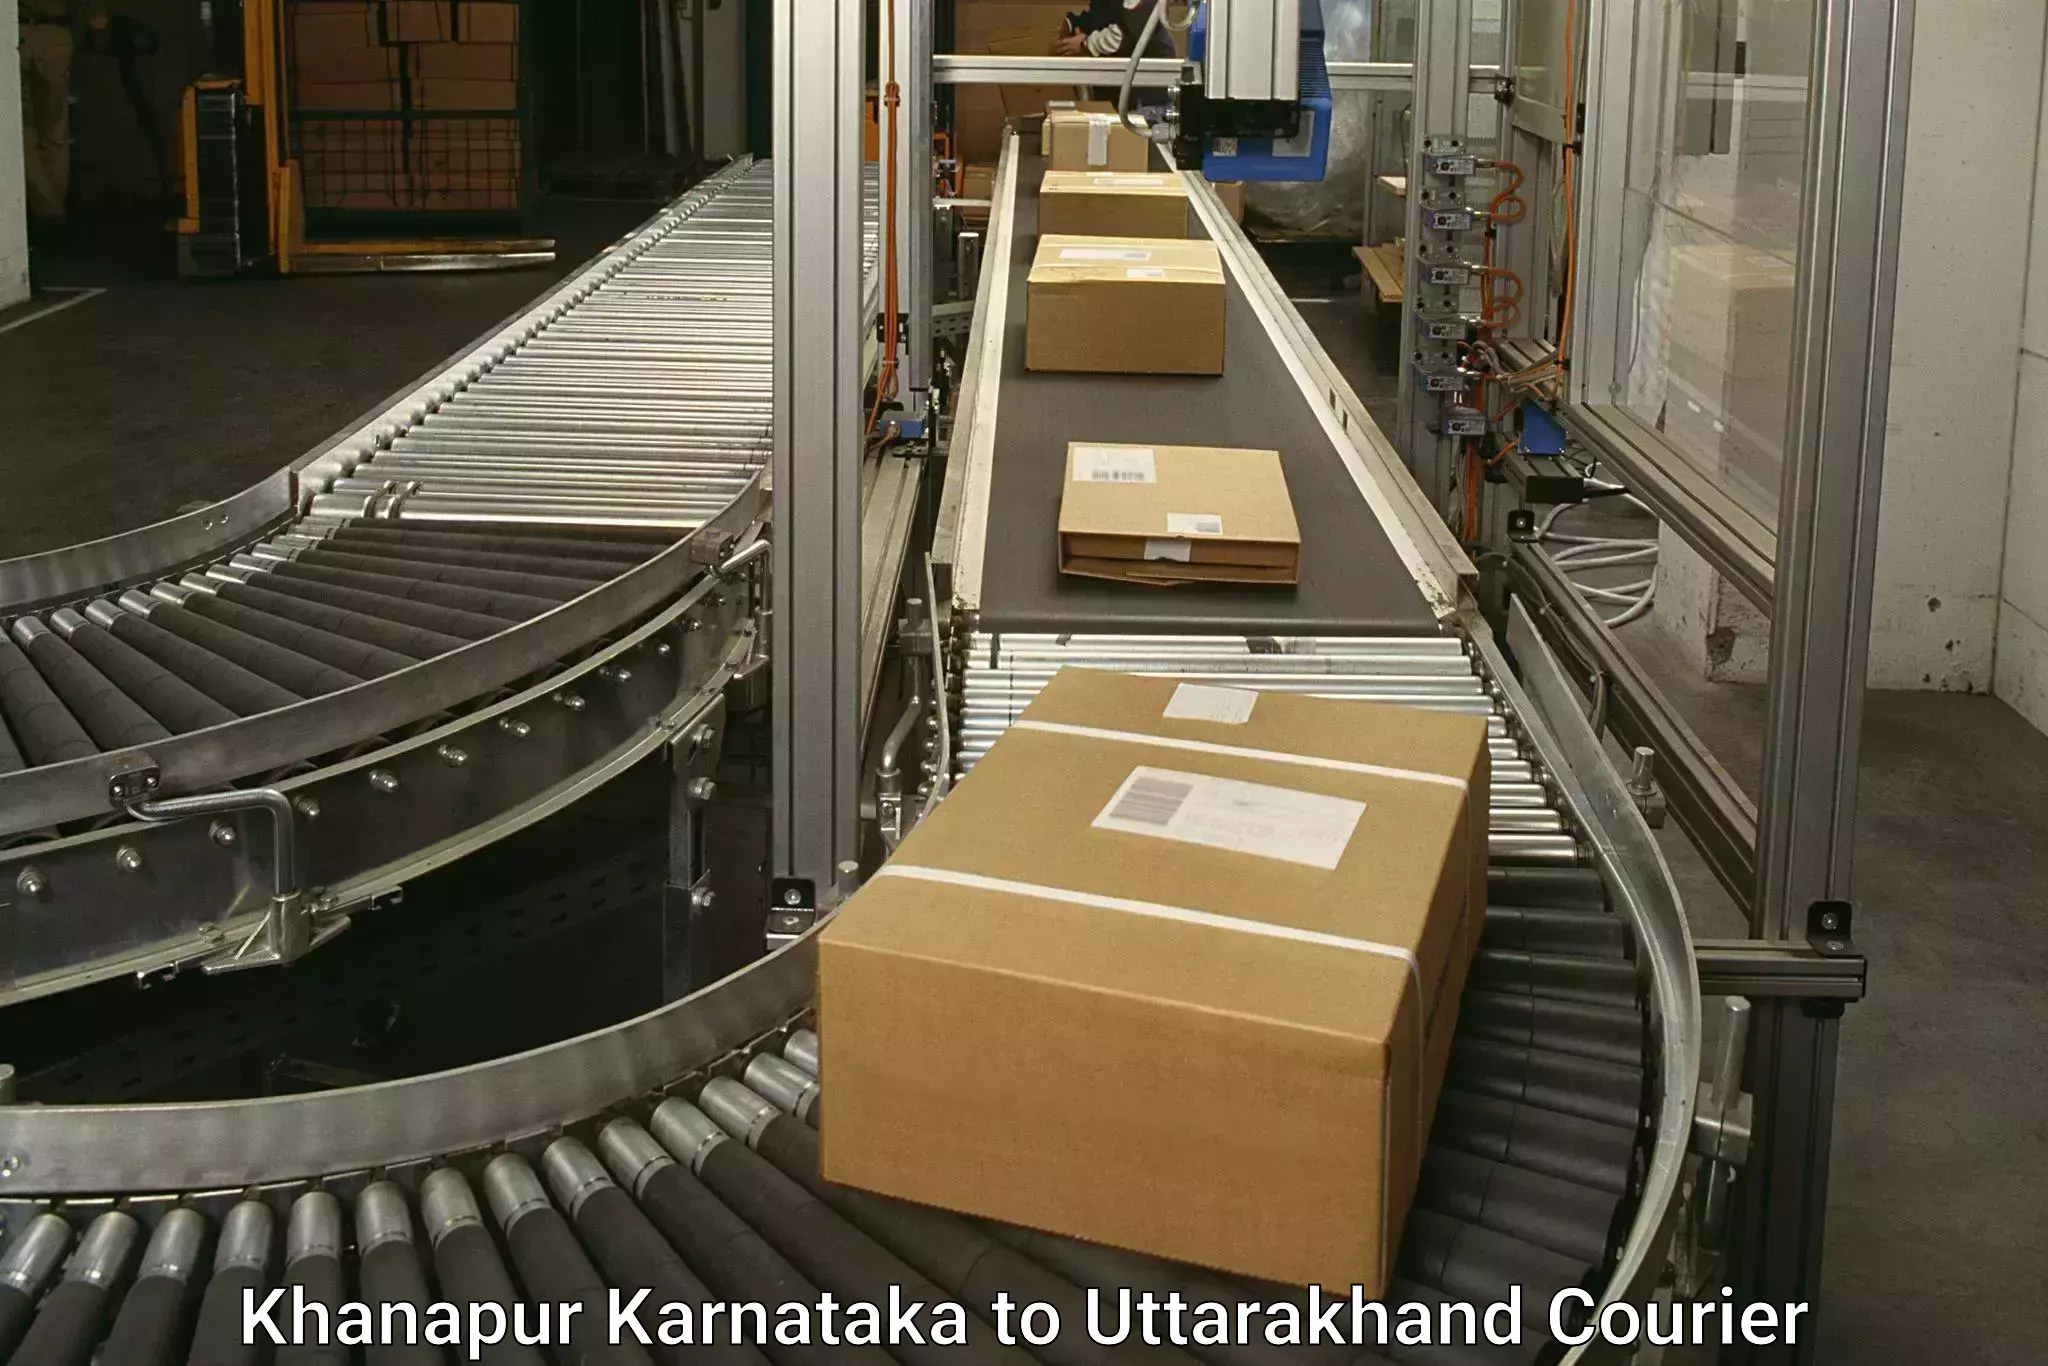 Courier service comparison Khanapur Karnataka to Baijnath Bageshwar